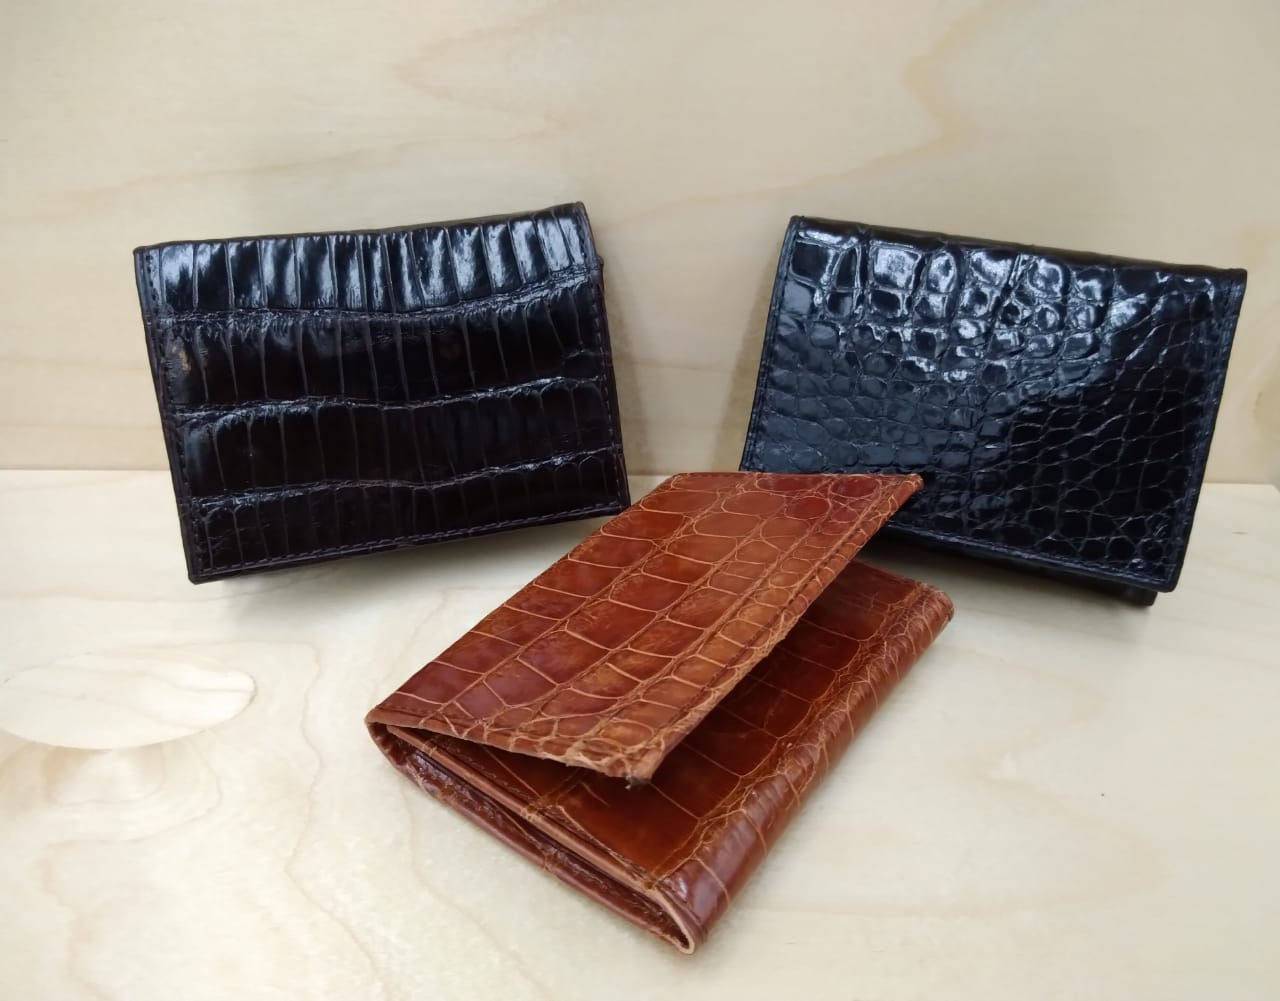 Alligator Black Classic Tri-Fold Wallet : Acadian Leather